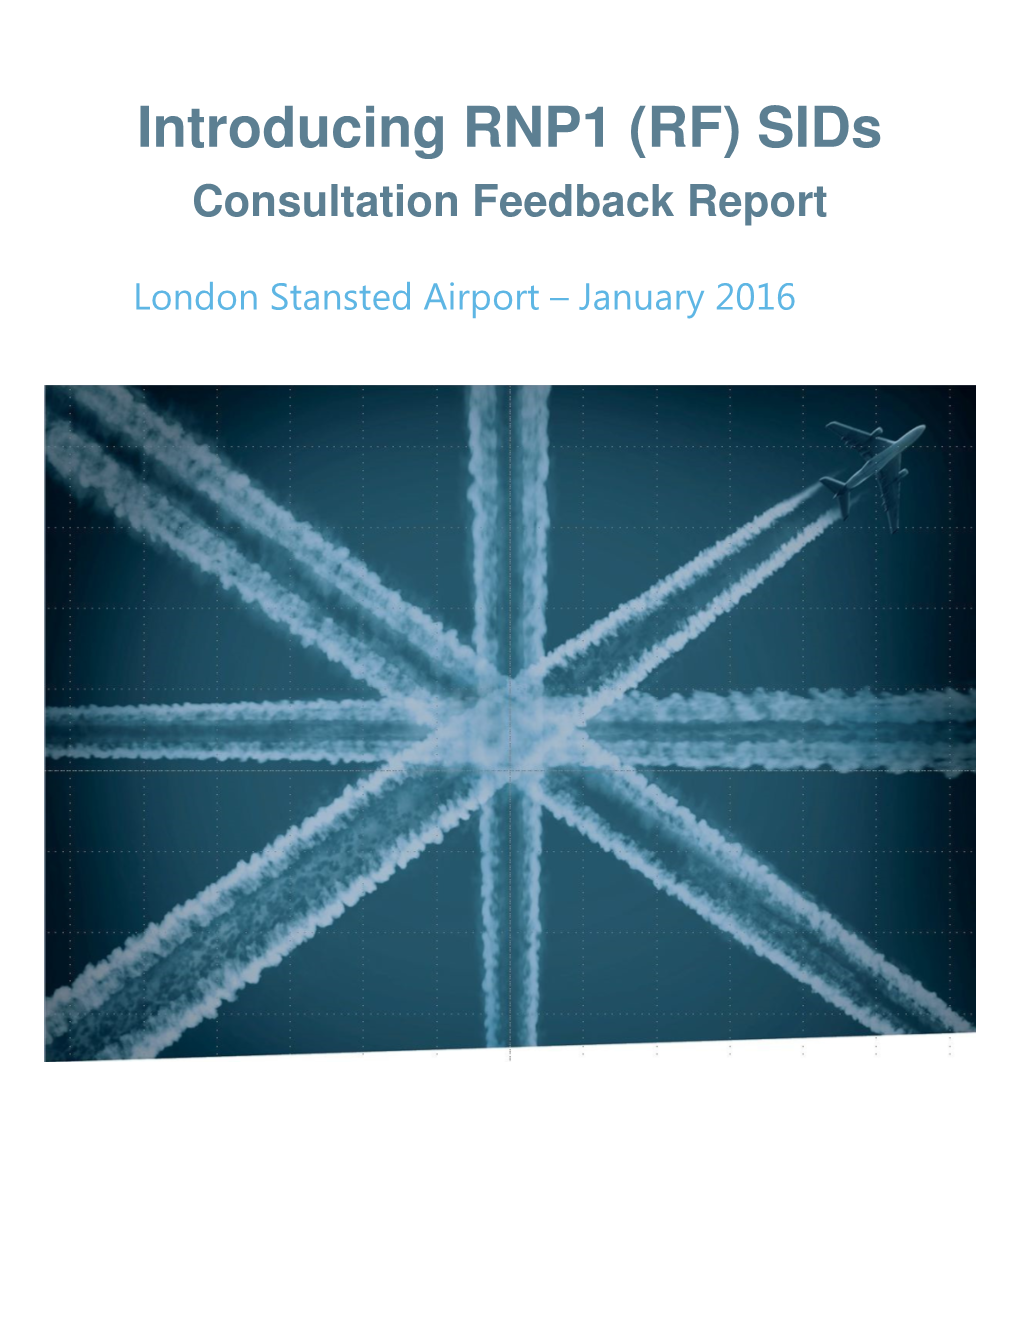 Consultation Feedback Report